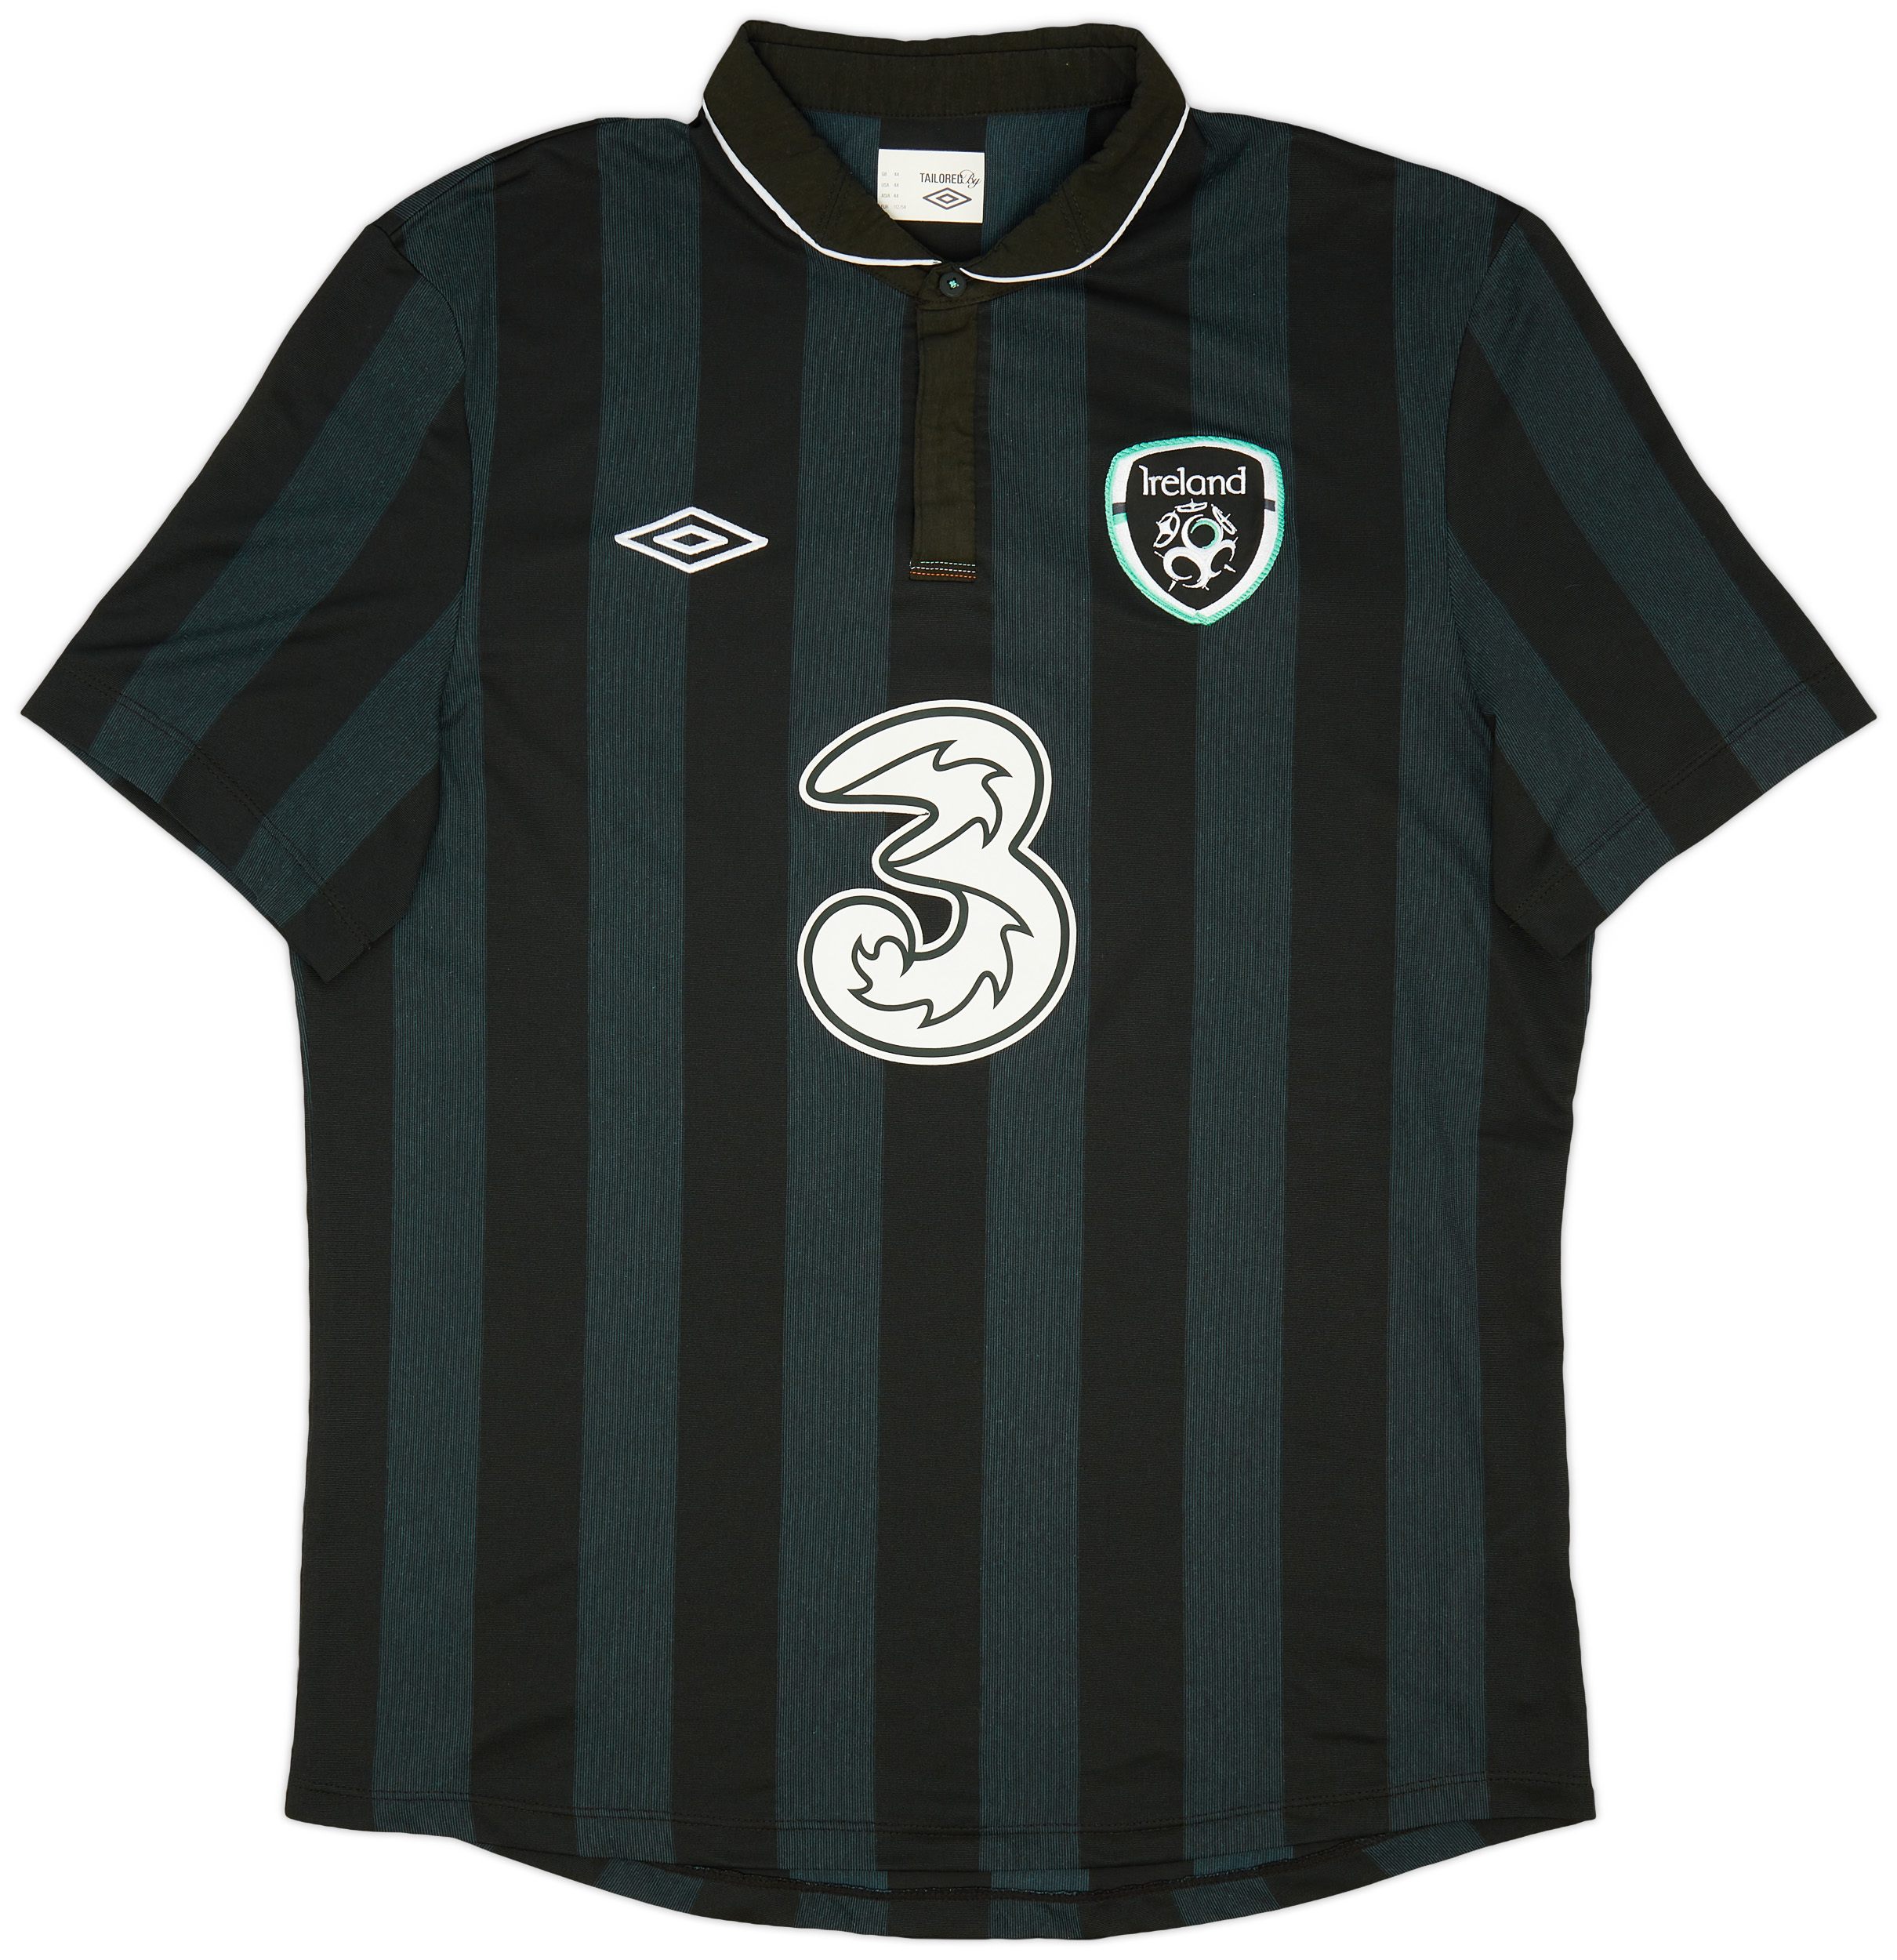 2013-14 Republic of Ireland Away Shirt - 8/10 - ()